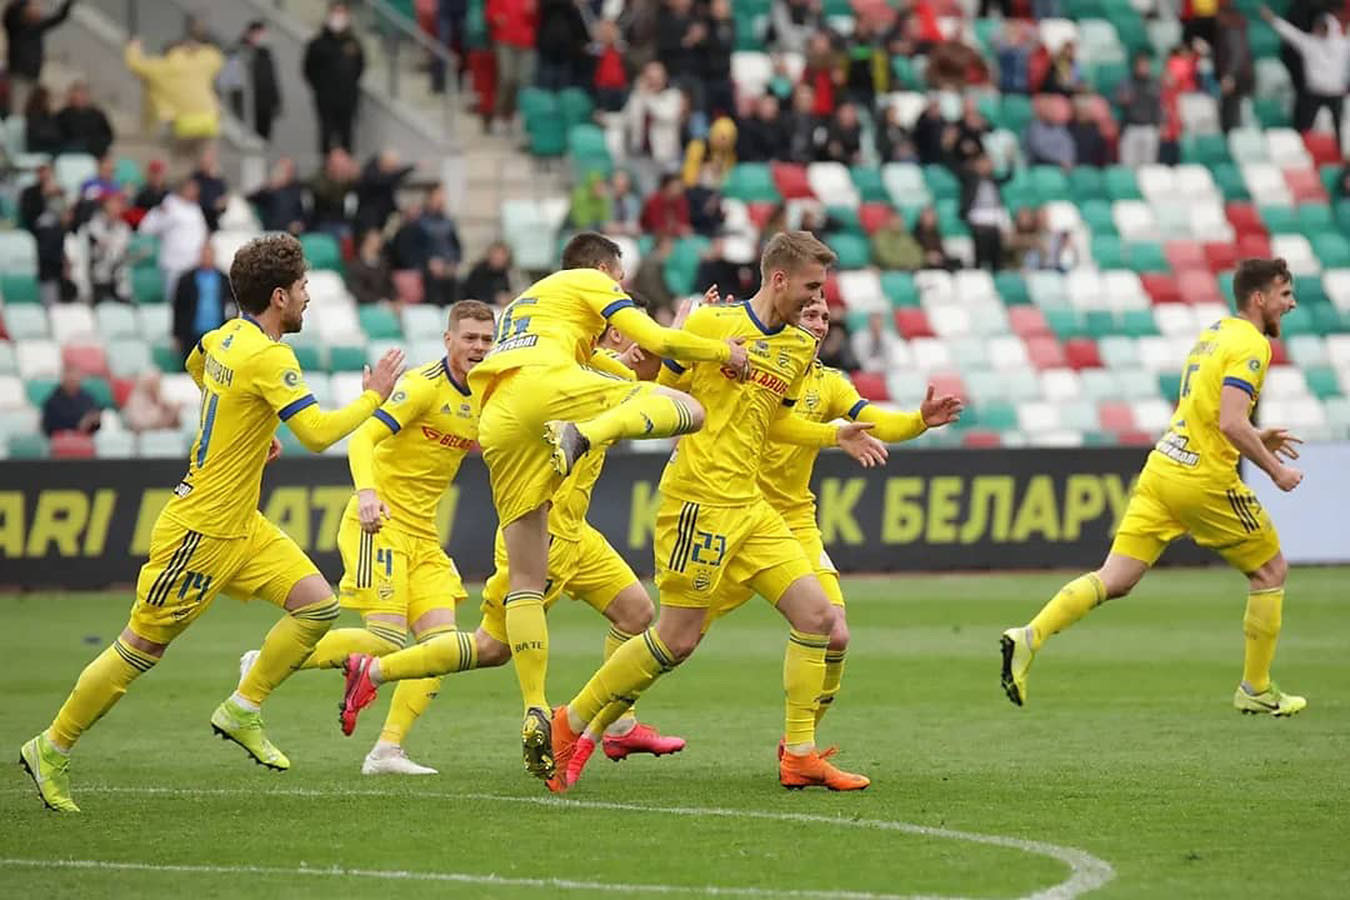 БАТЭ – Слуцк прогноз 14 марта 2021 года: ставки и коэффициенты на матч чемпионата Беларуси